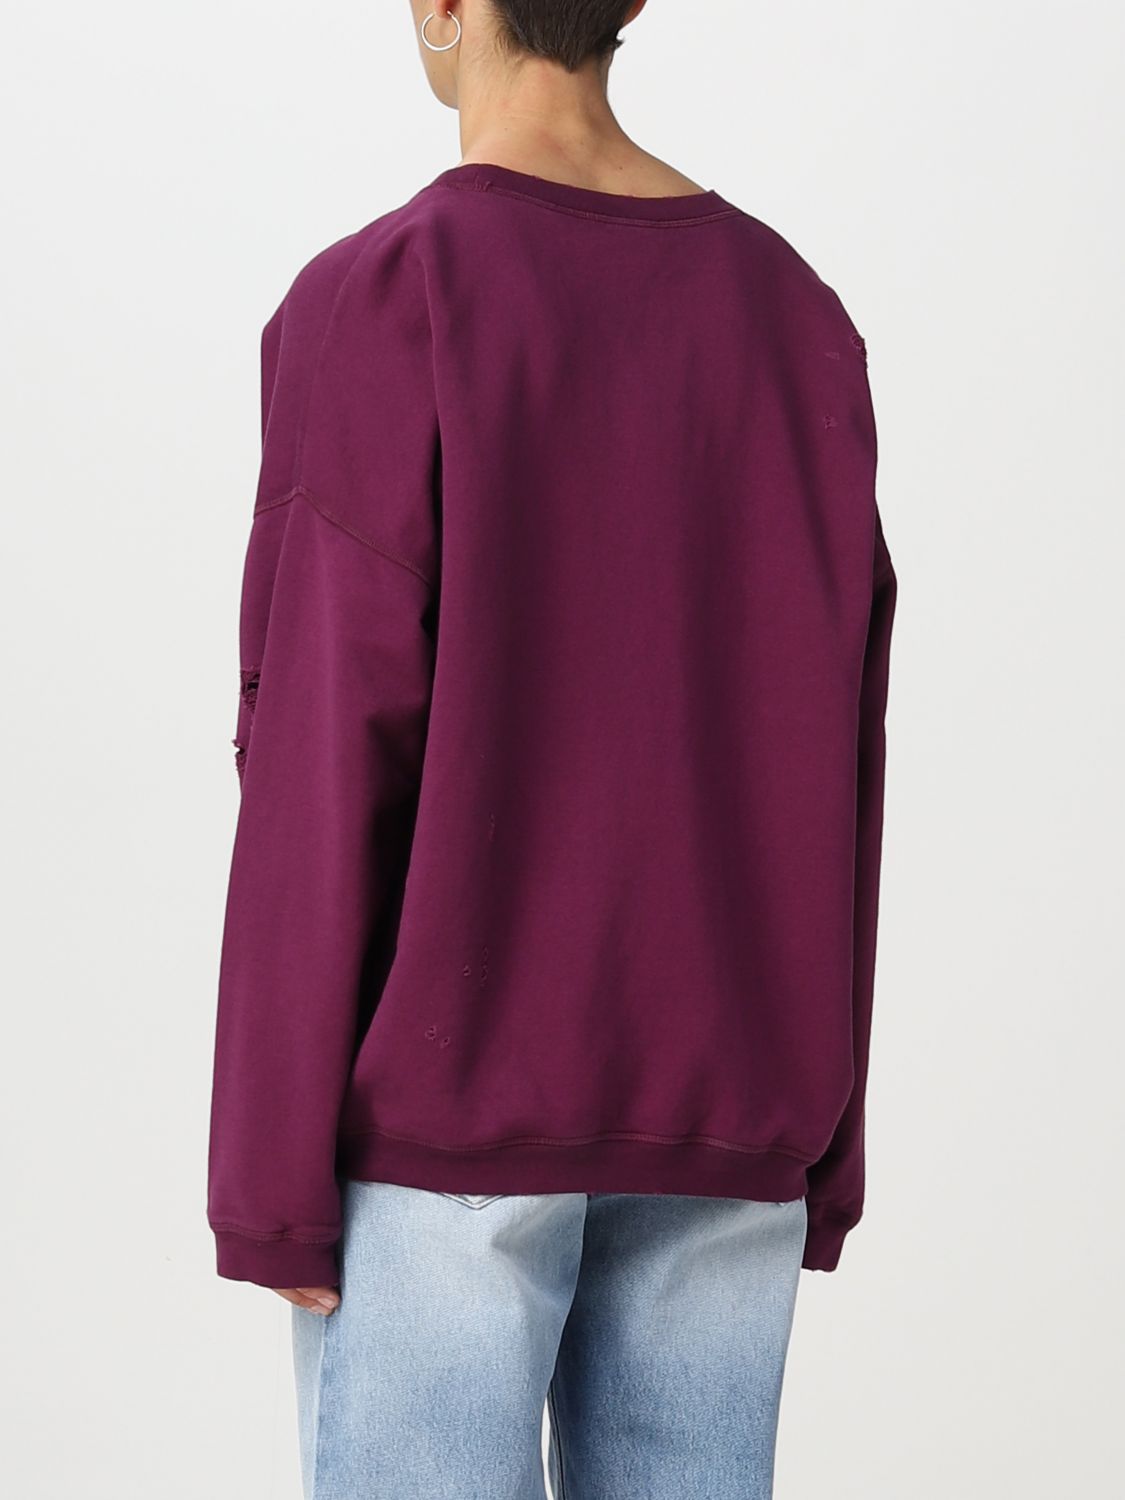 DSQUARED2: sweatshirt for woman - Violet Dsquared2 sweatshirt S75GU0444S25539 online on GIGLIO.COM